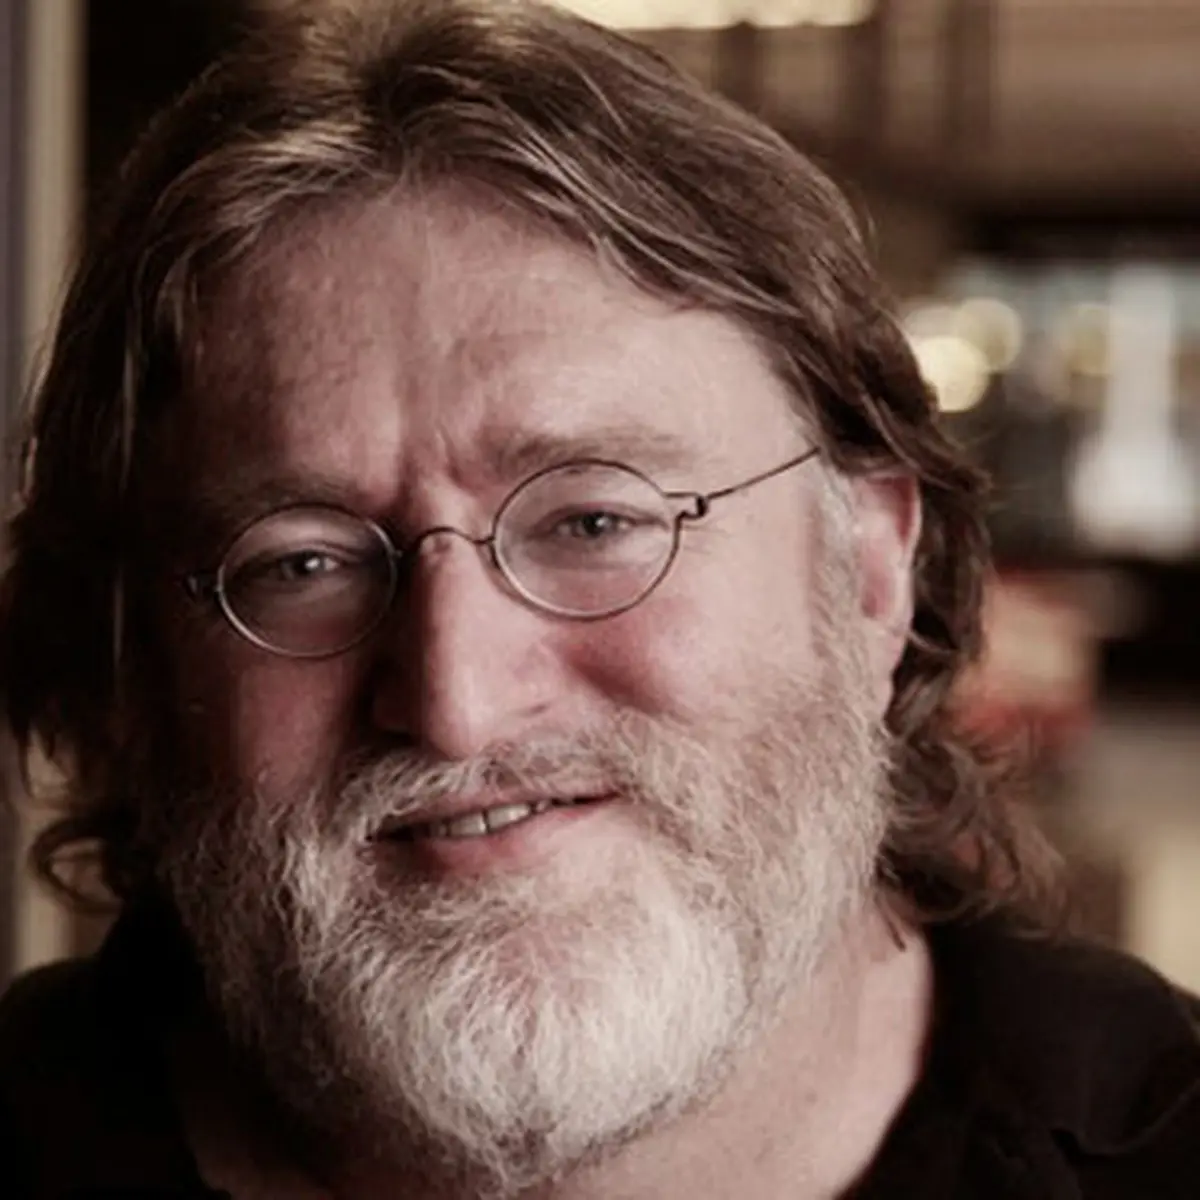 Fortuna de Gabe Newell supera a de Donald Trump e Oprah Winfrey - Última  Ficha